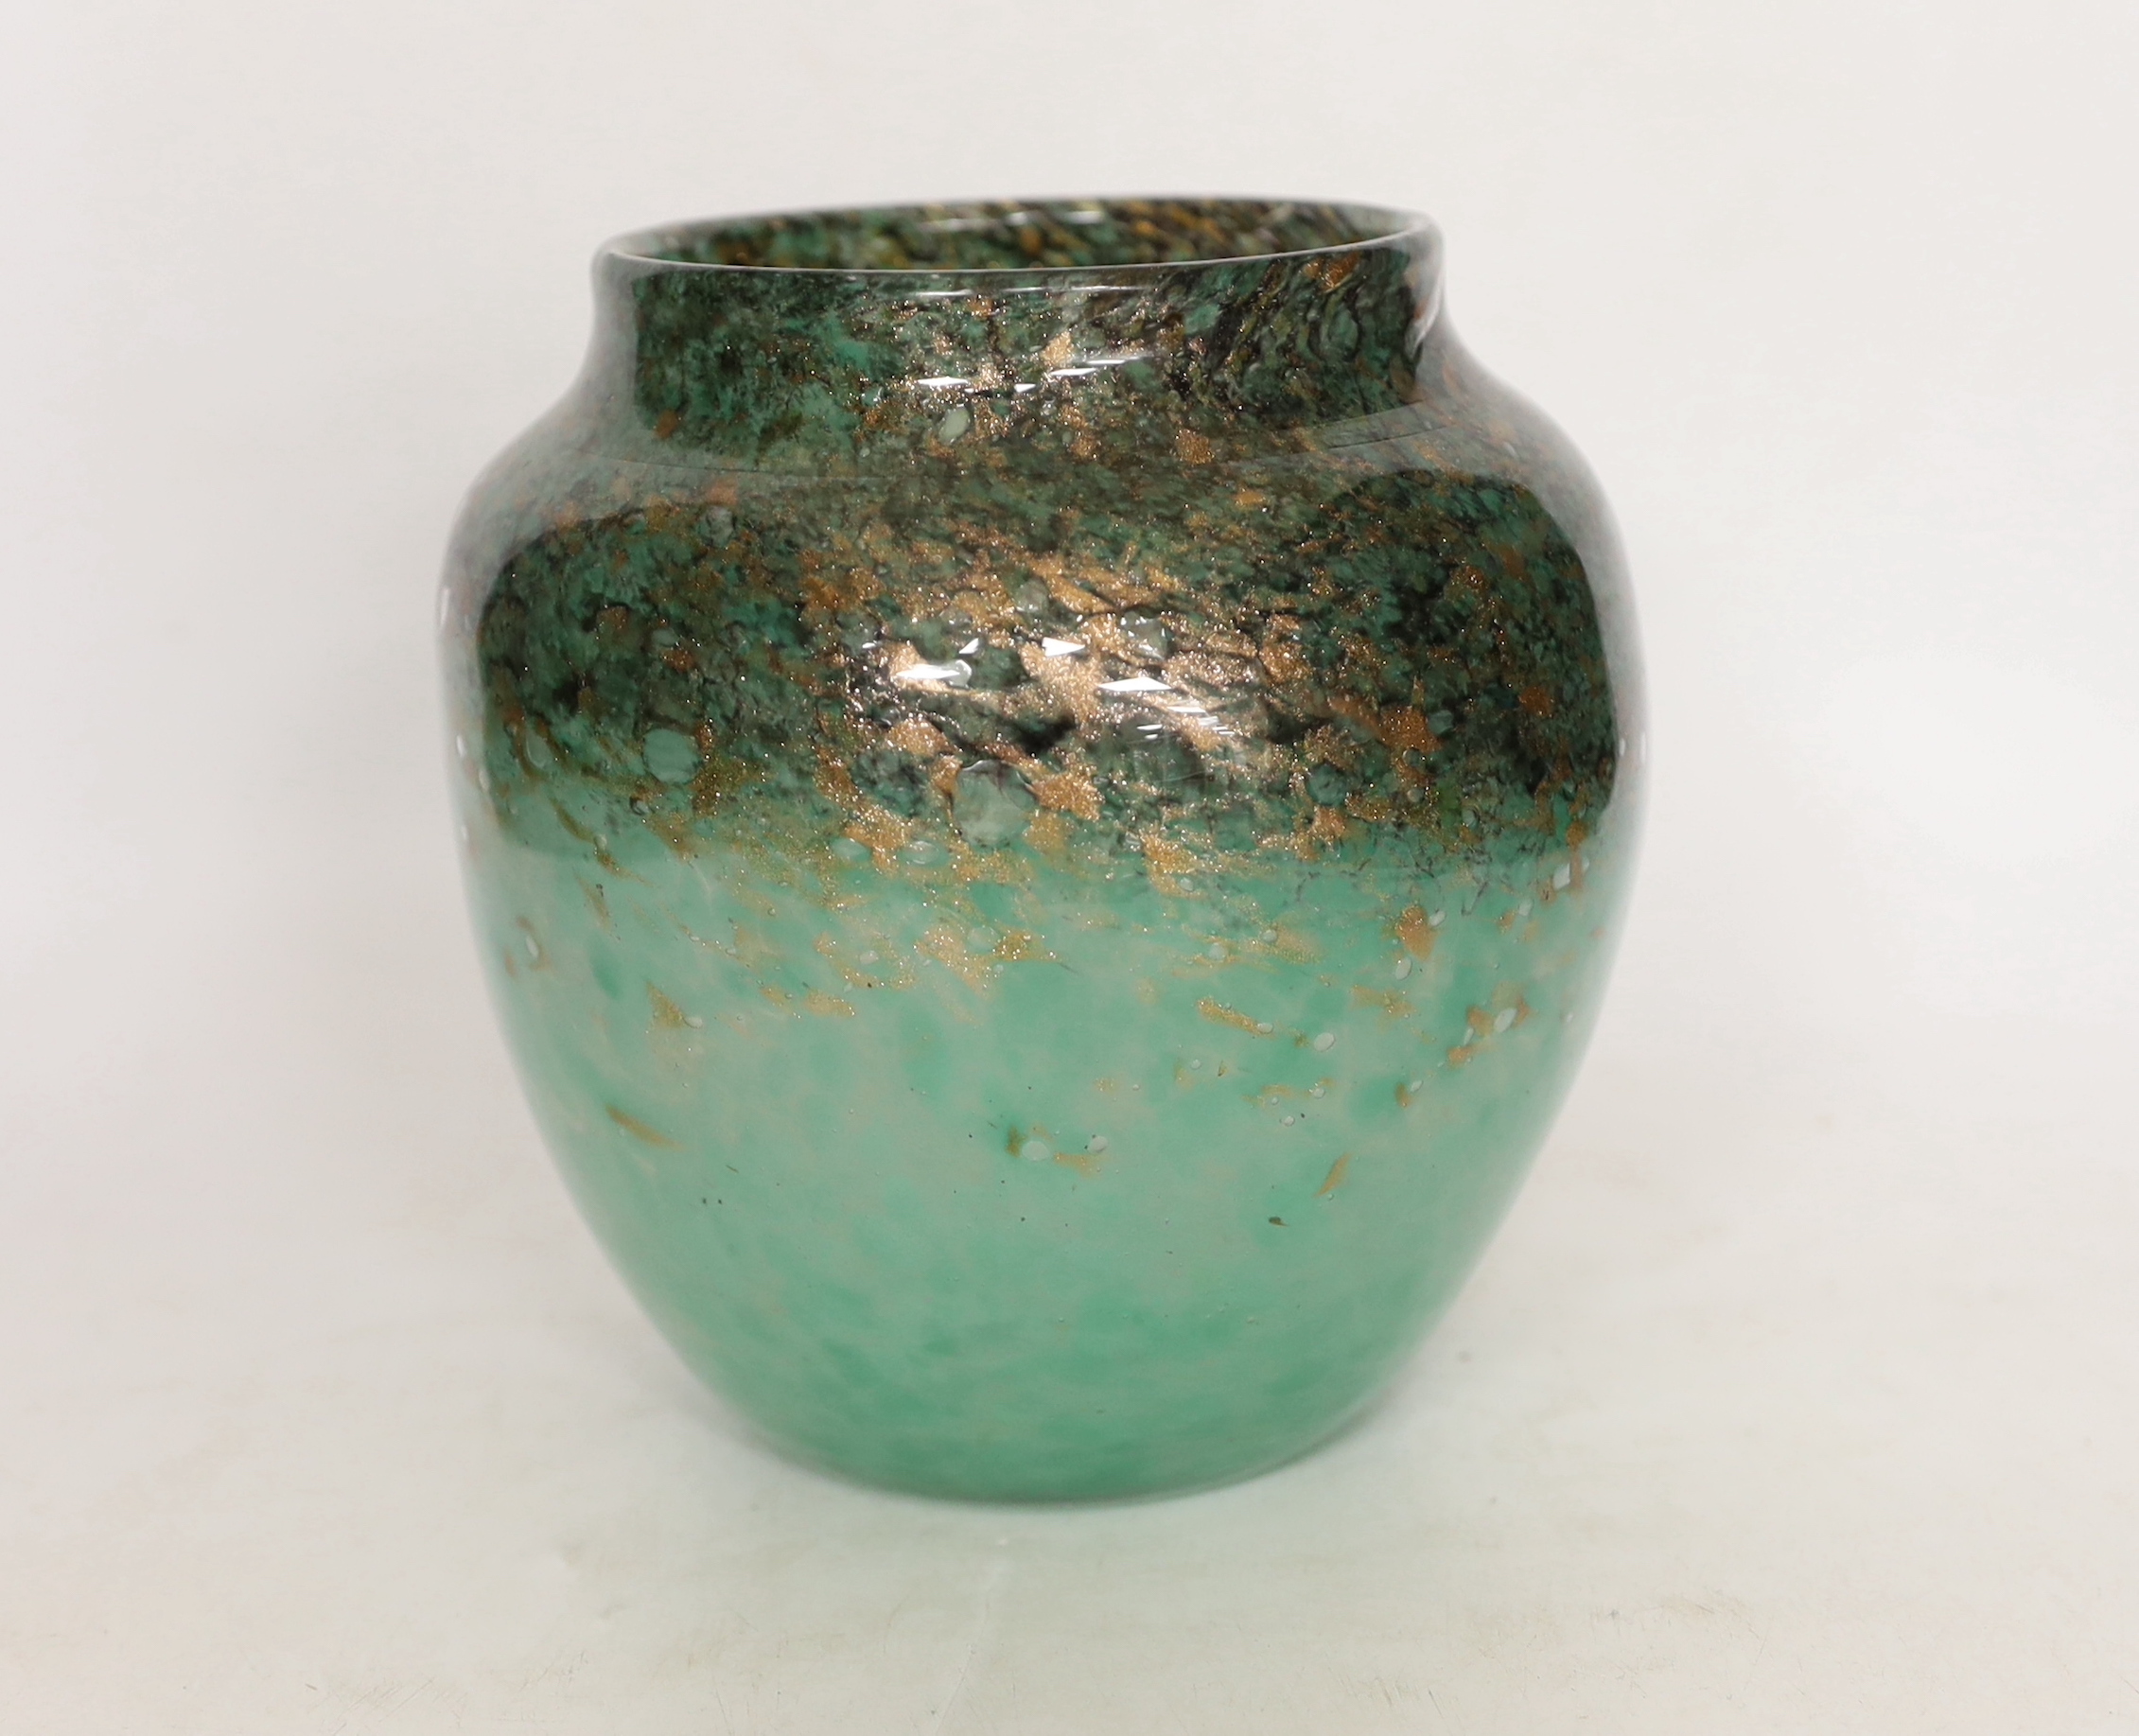 A Monart green glass vase, 17cm